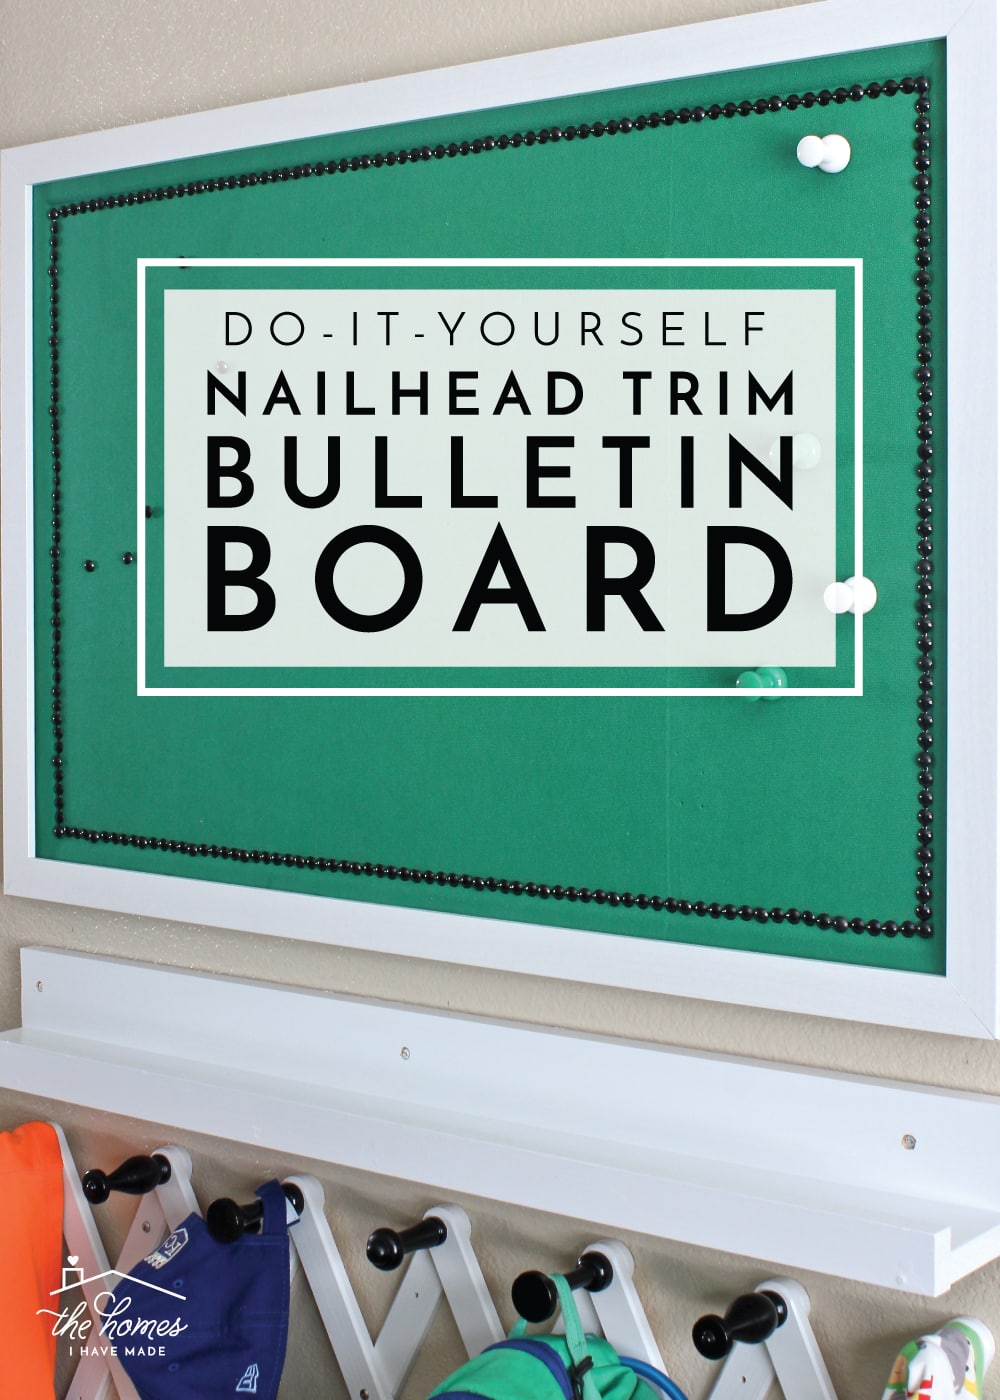 DIY Bulletin Board - Make Your Own Fabric Bulletin Board Easily